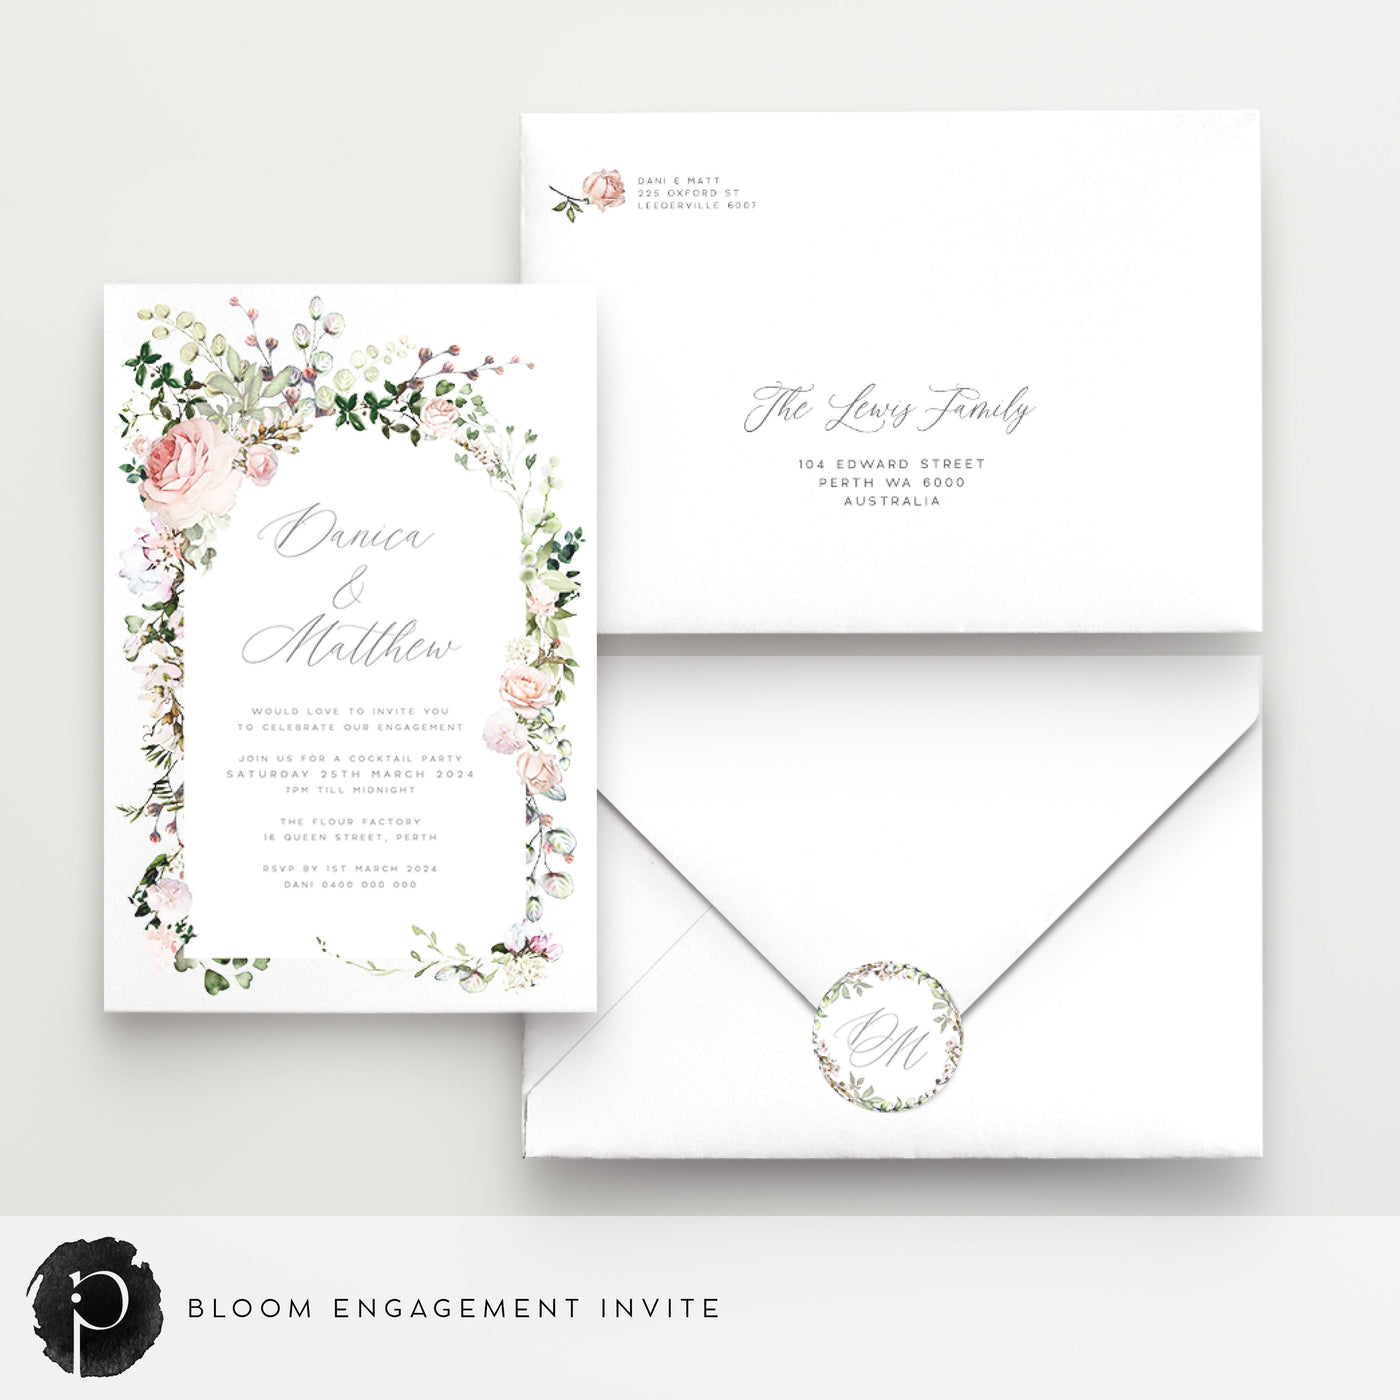 Bloom - Engagement Invitations